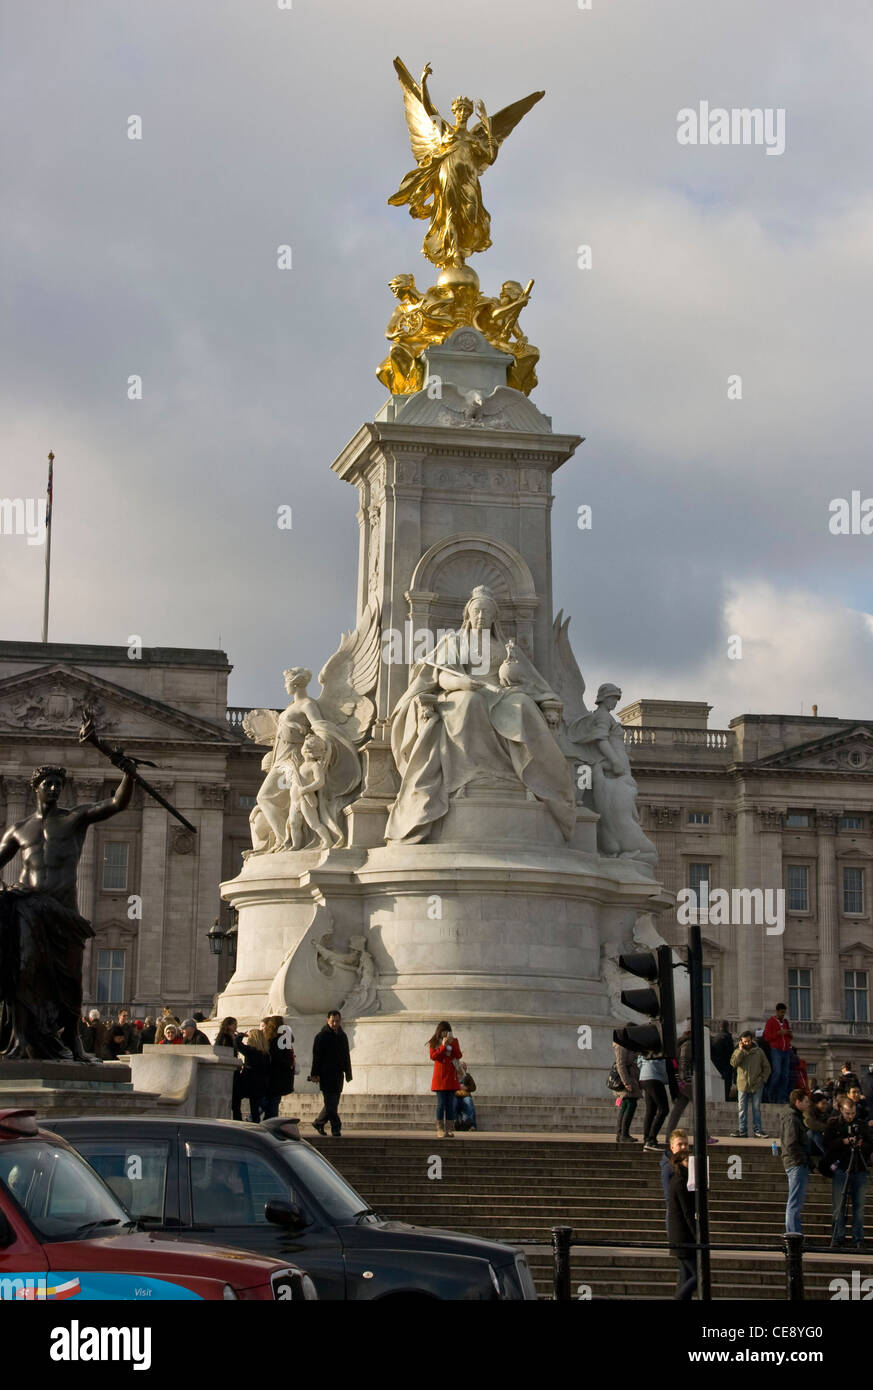 Grado 1 elencati in marmo Victoria Memorial da Sir Thomas Brock Buckingham Palace Queen's Gardens Londra Inghilterra Europa Foto Stock